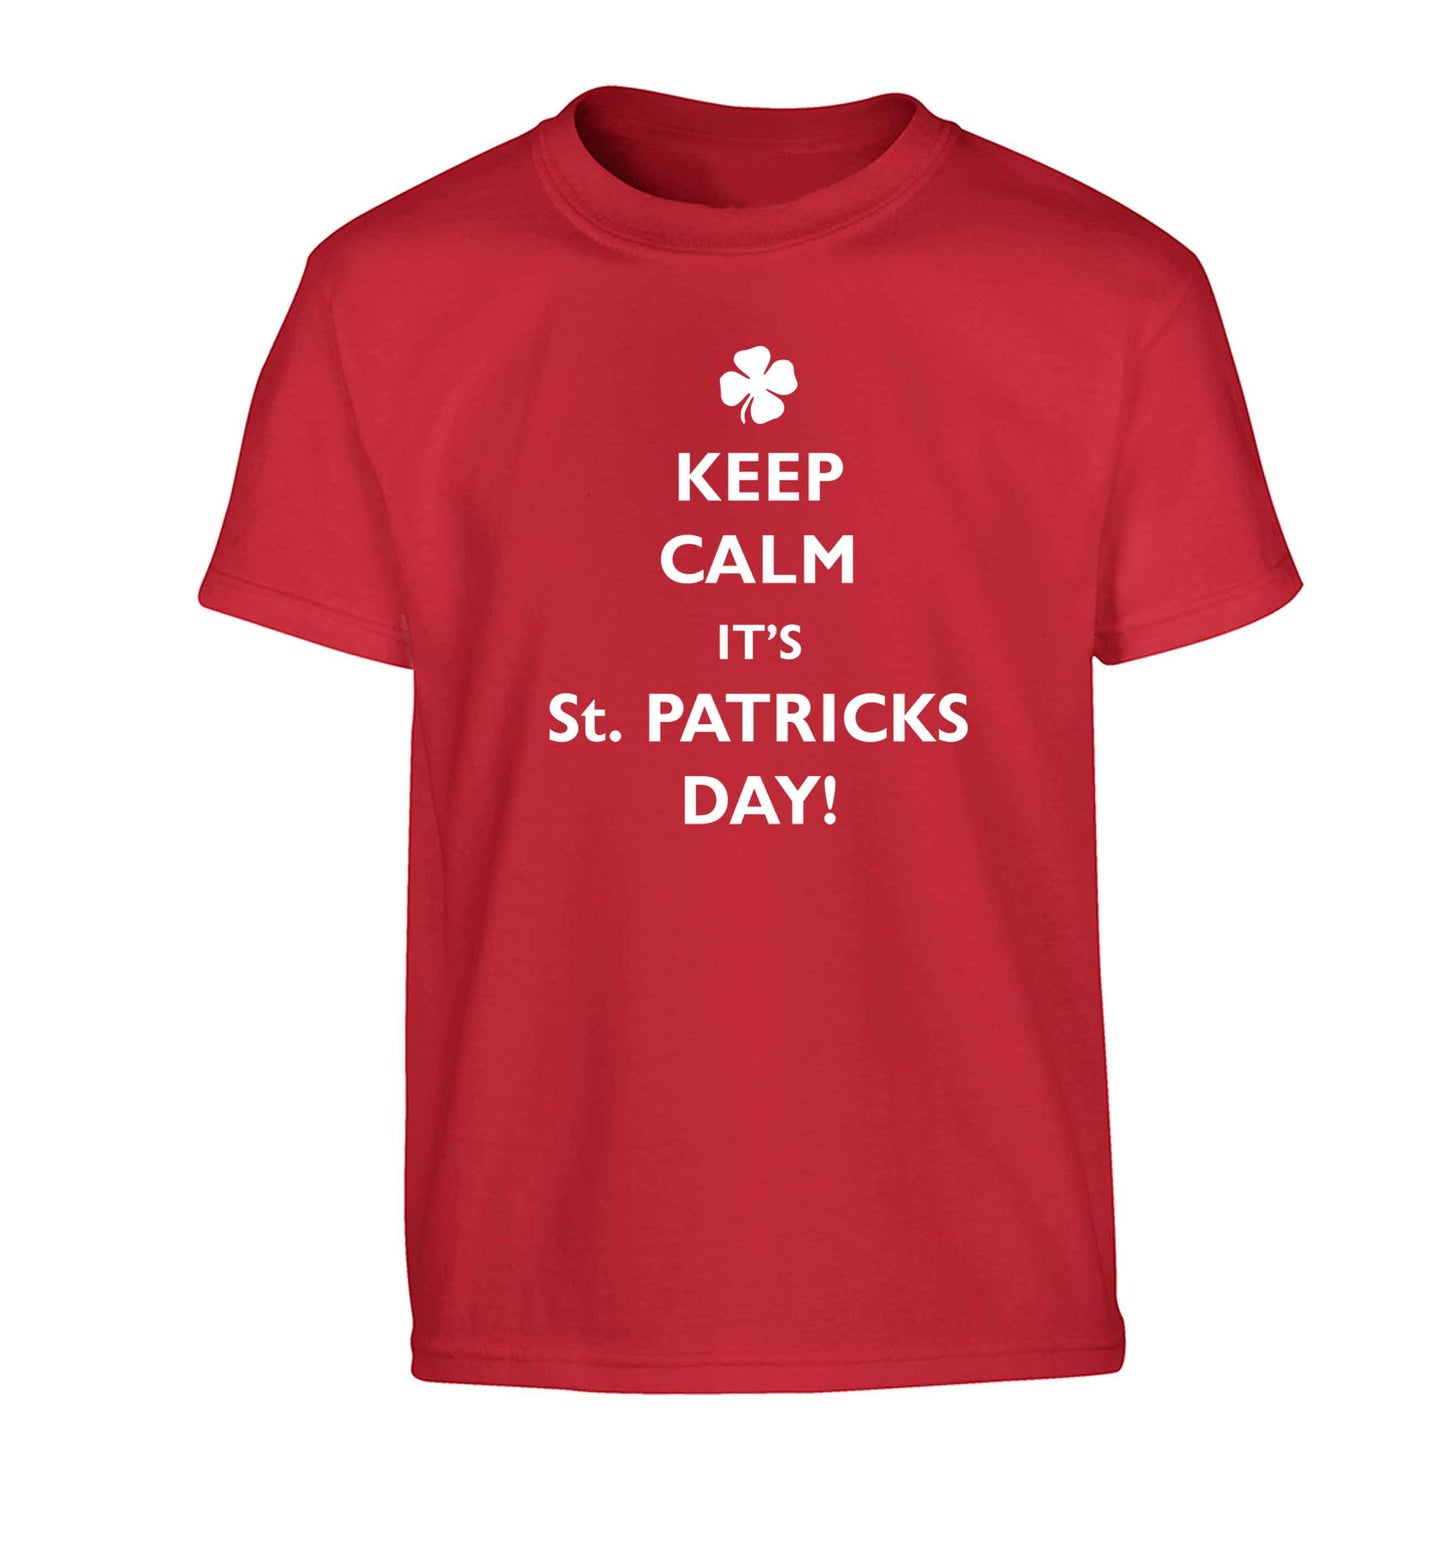 Keep calm it's St.Patricks day Children's red Tshirt 12-13 Years